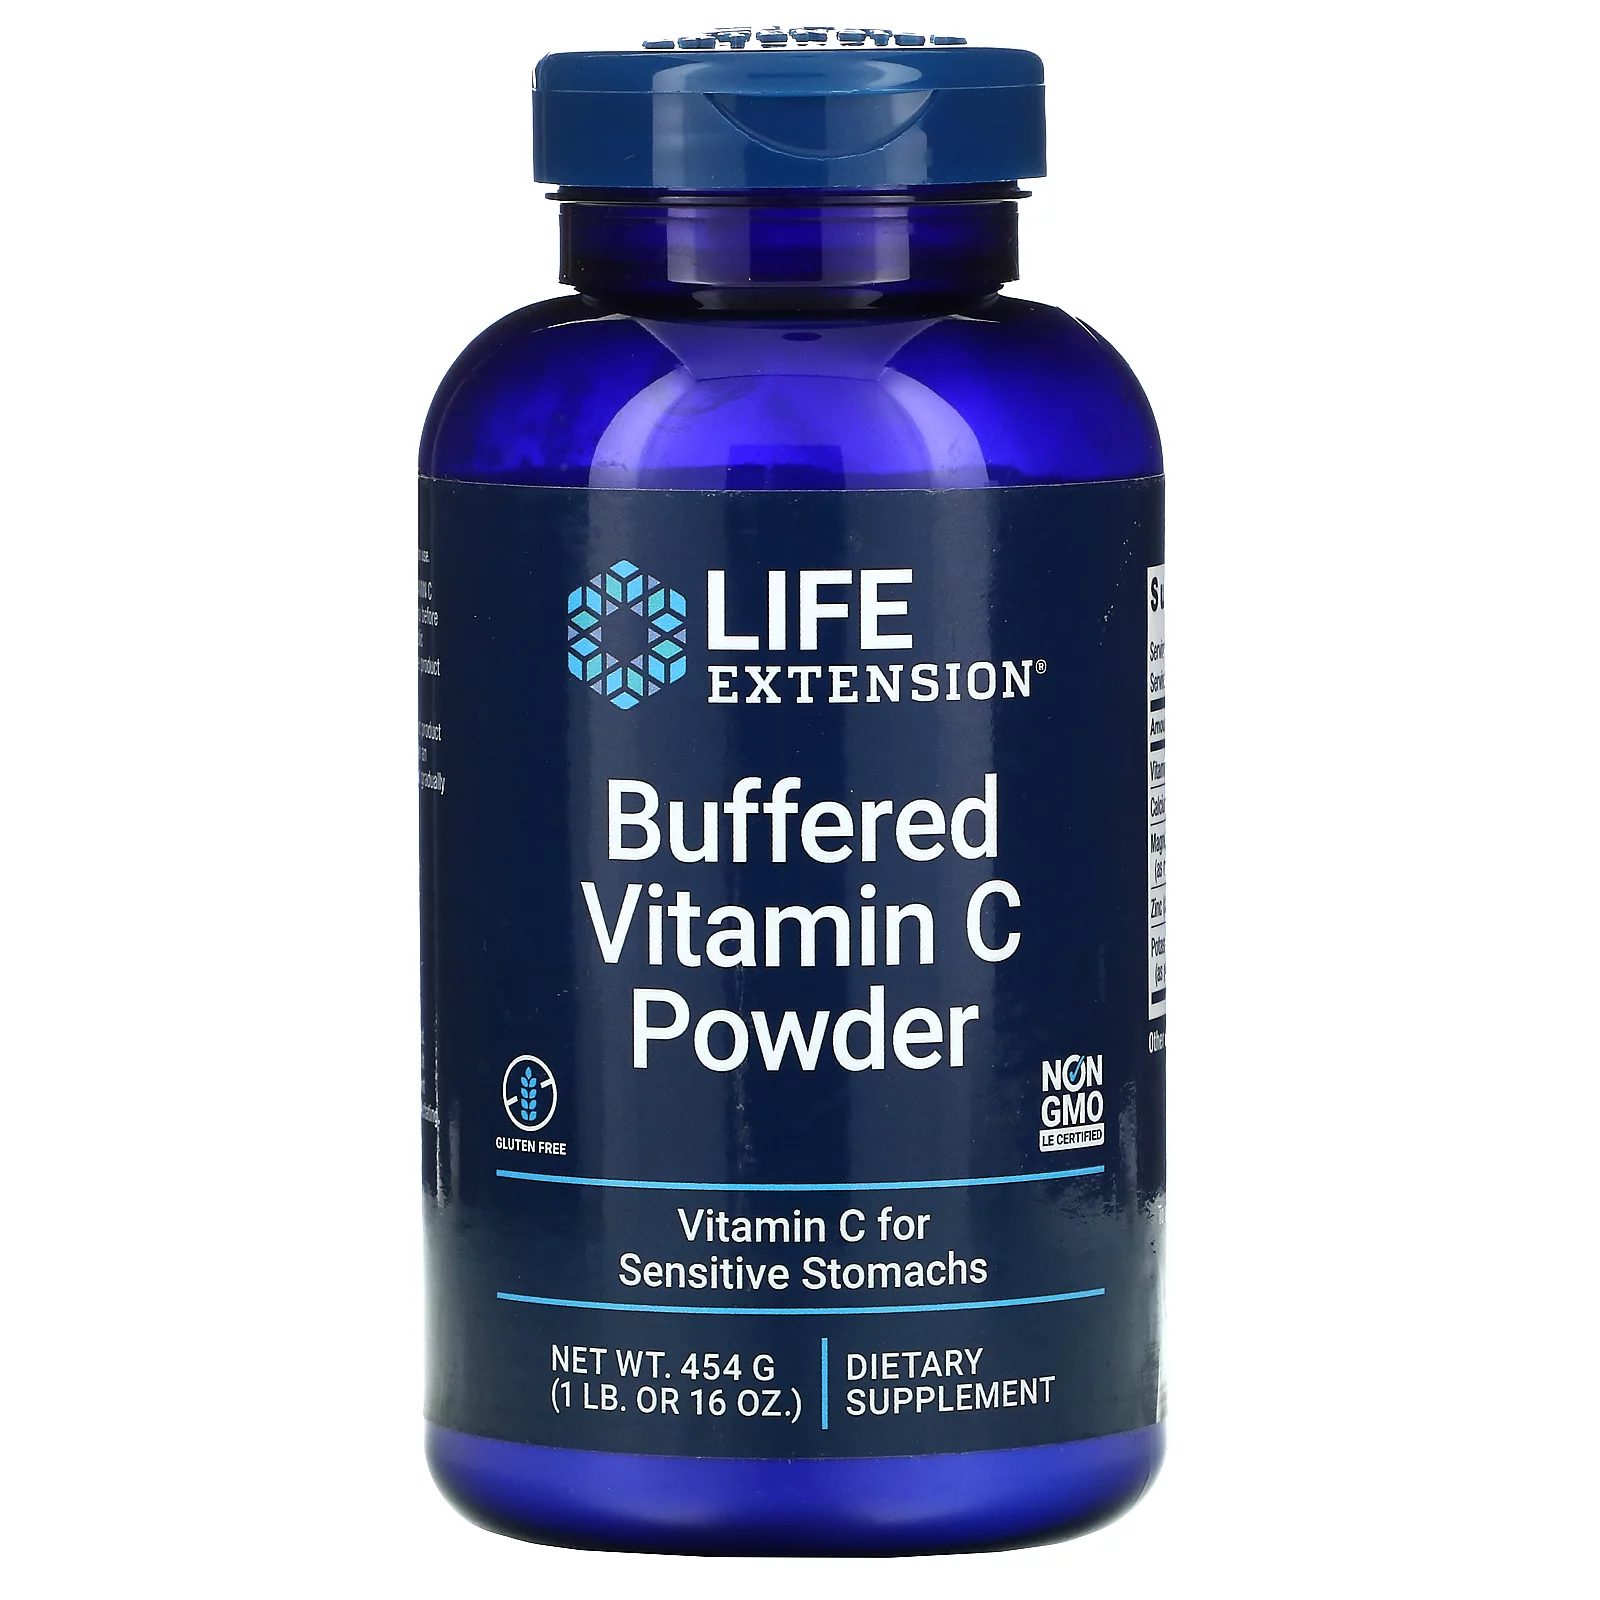 Buffered Vitamin C powder